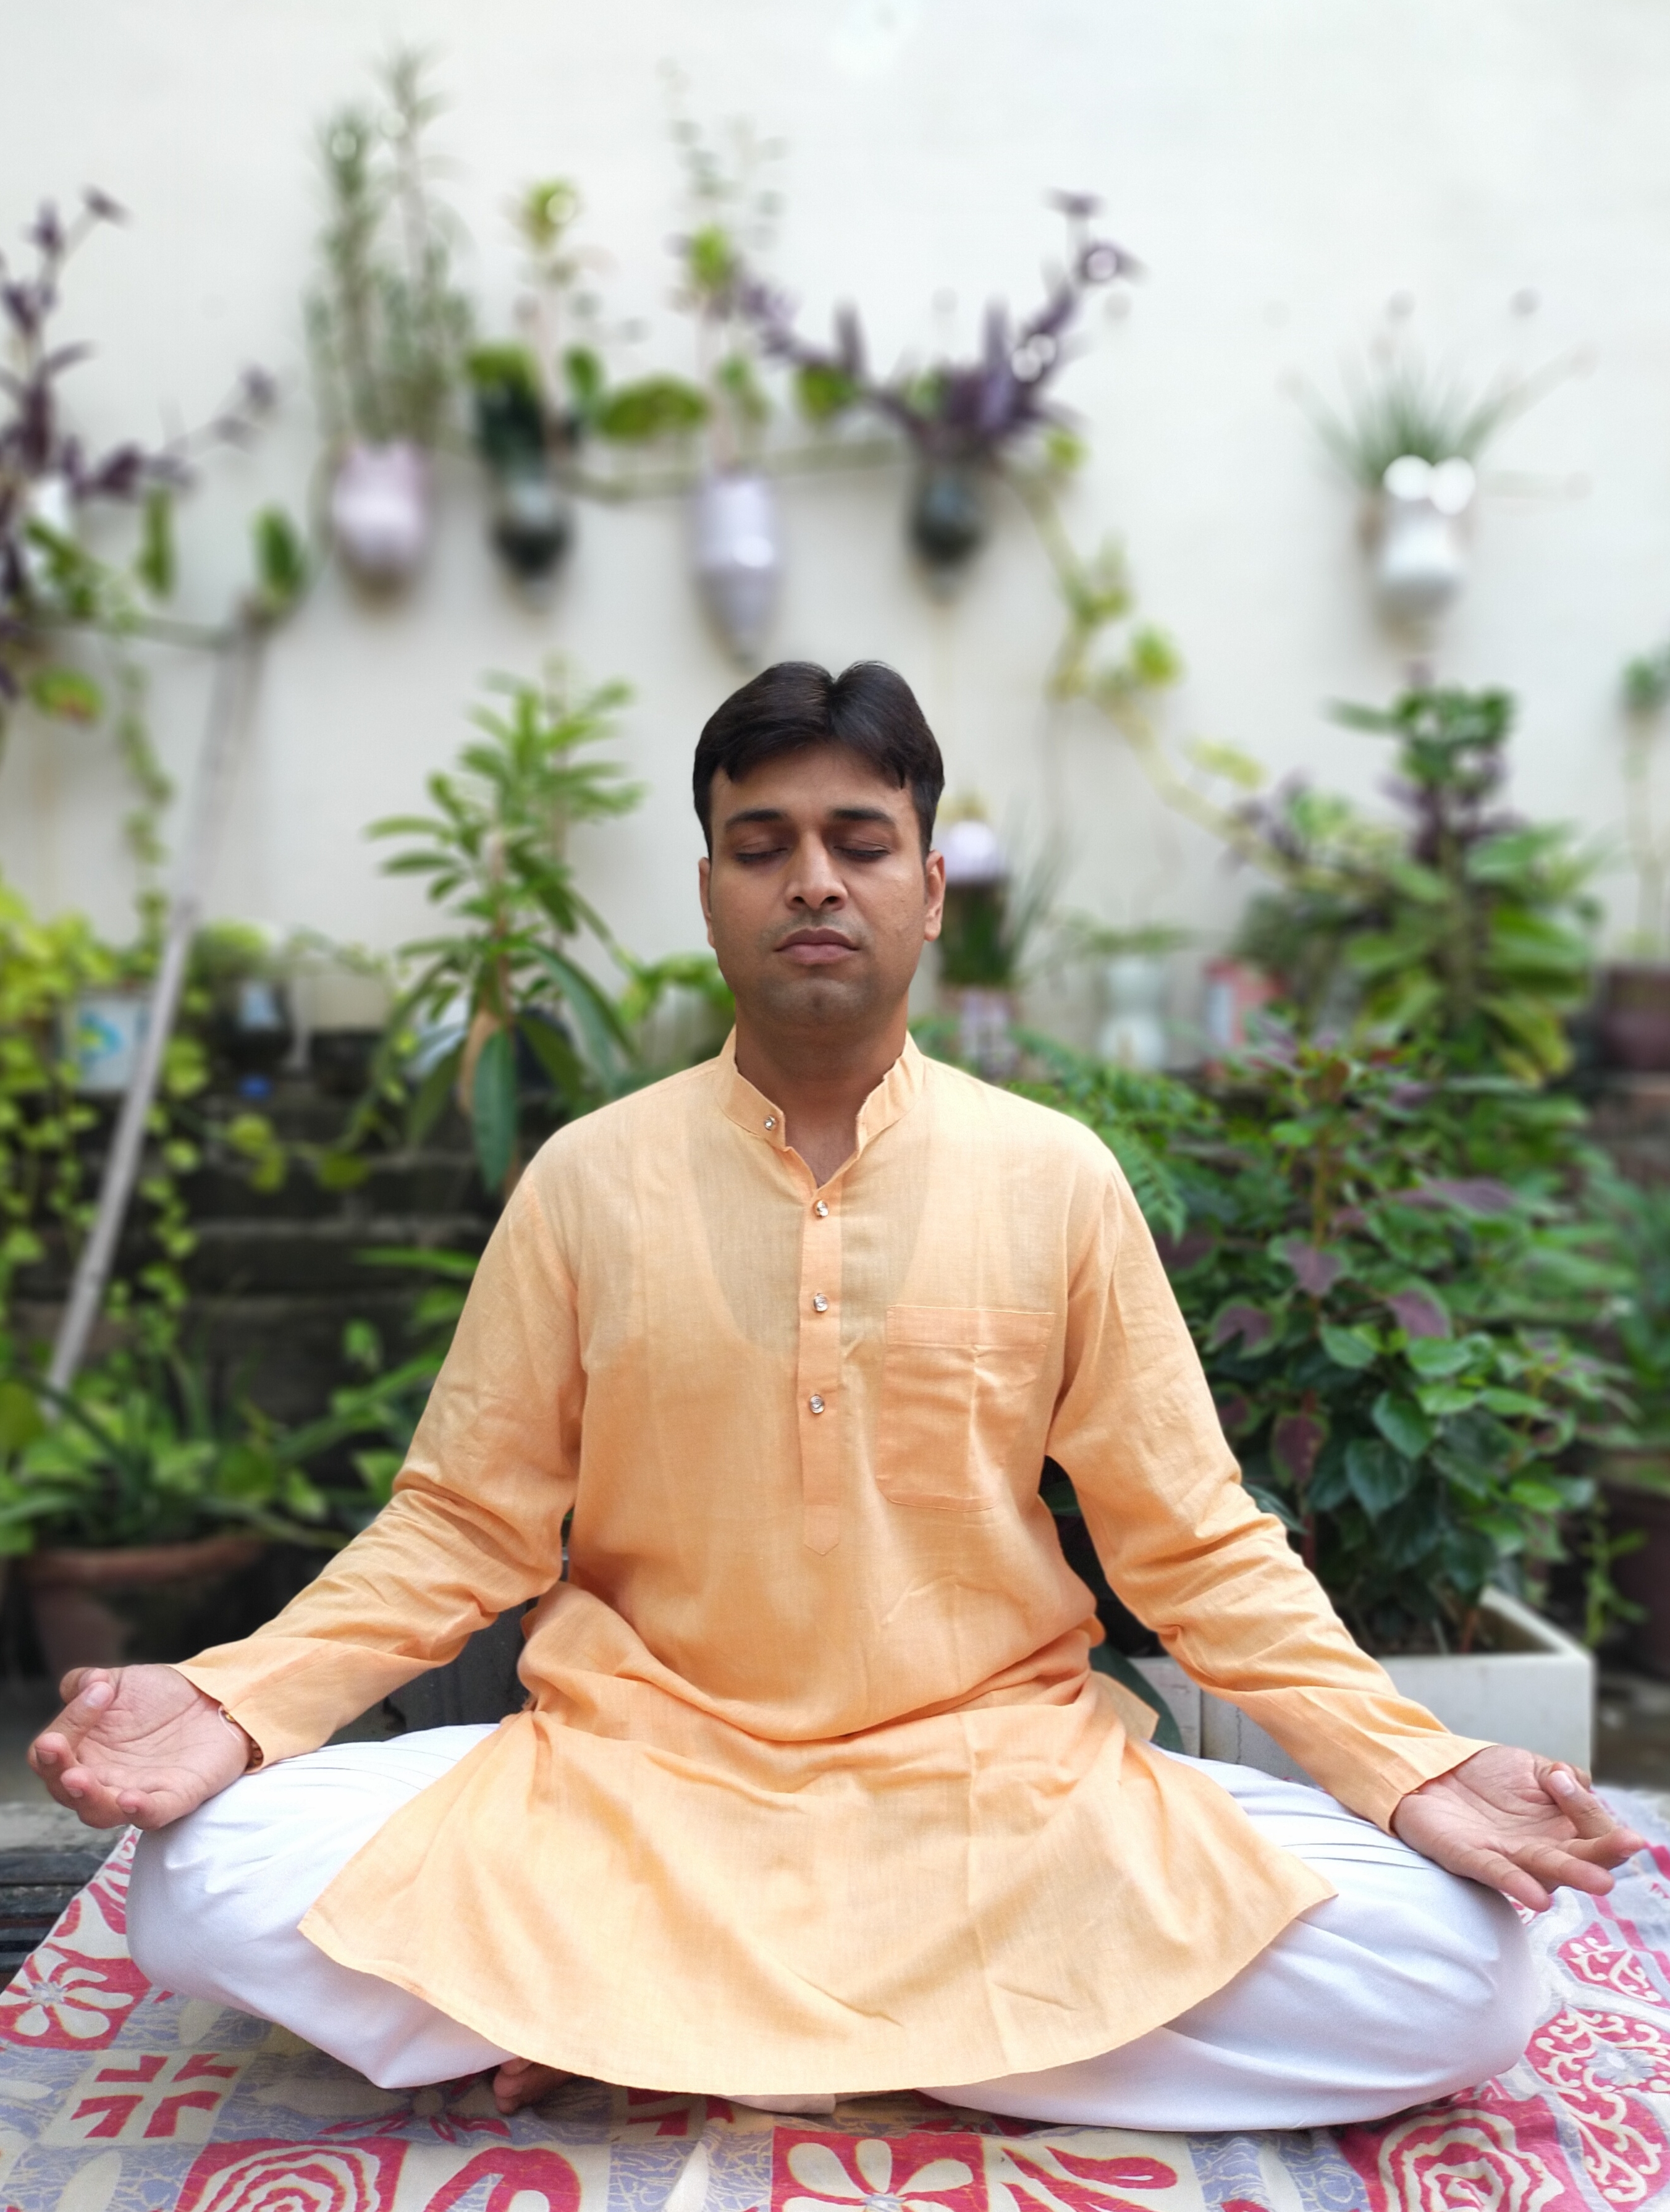 Ashtanga Yoga Teacher at Sri Yoga Ashram Rishikesh